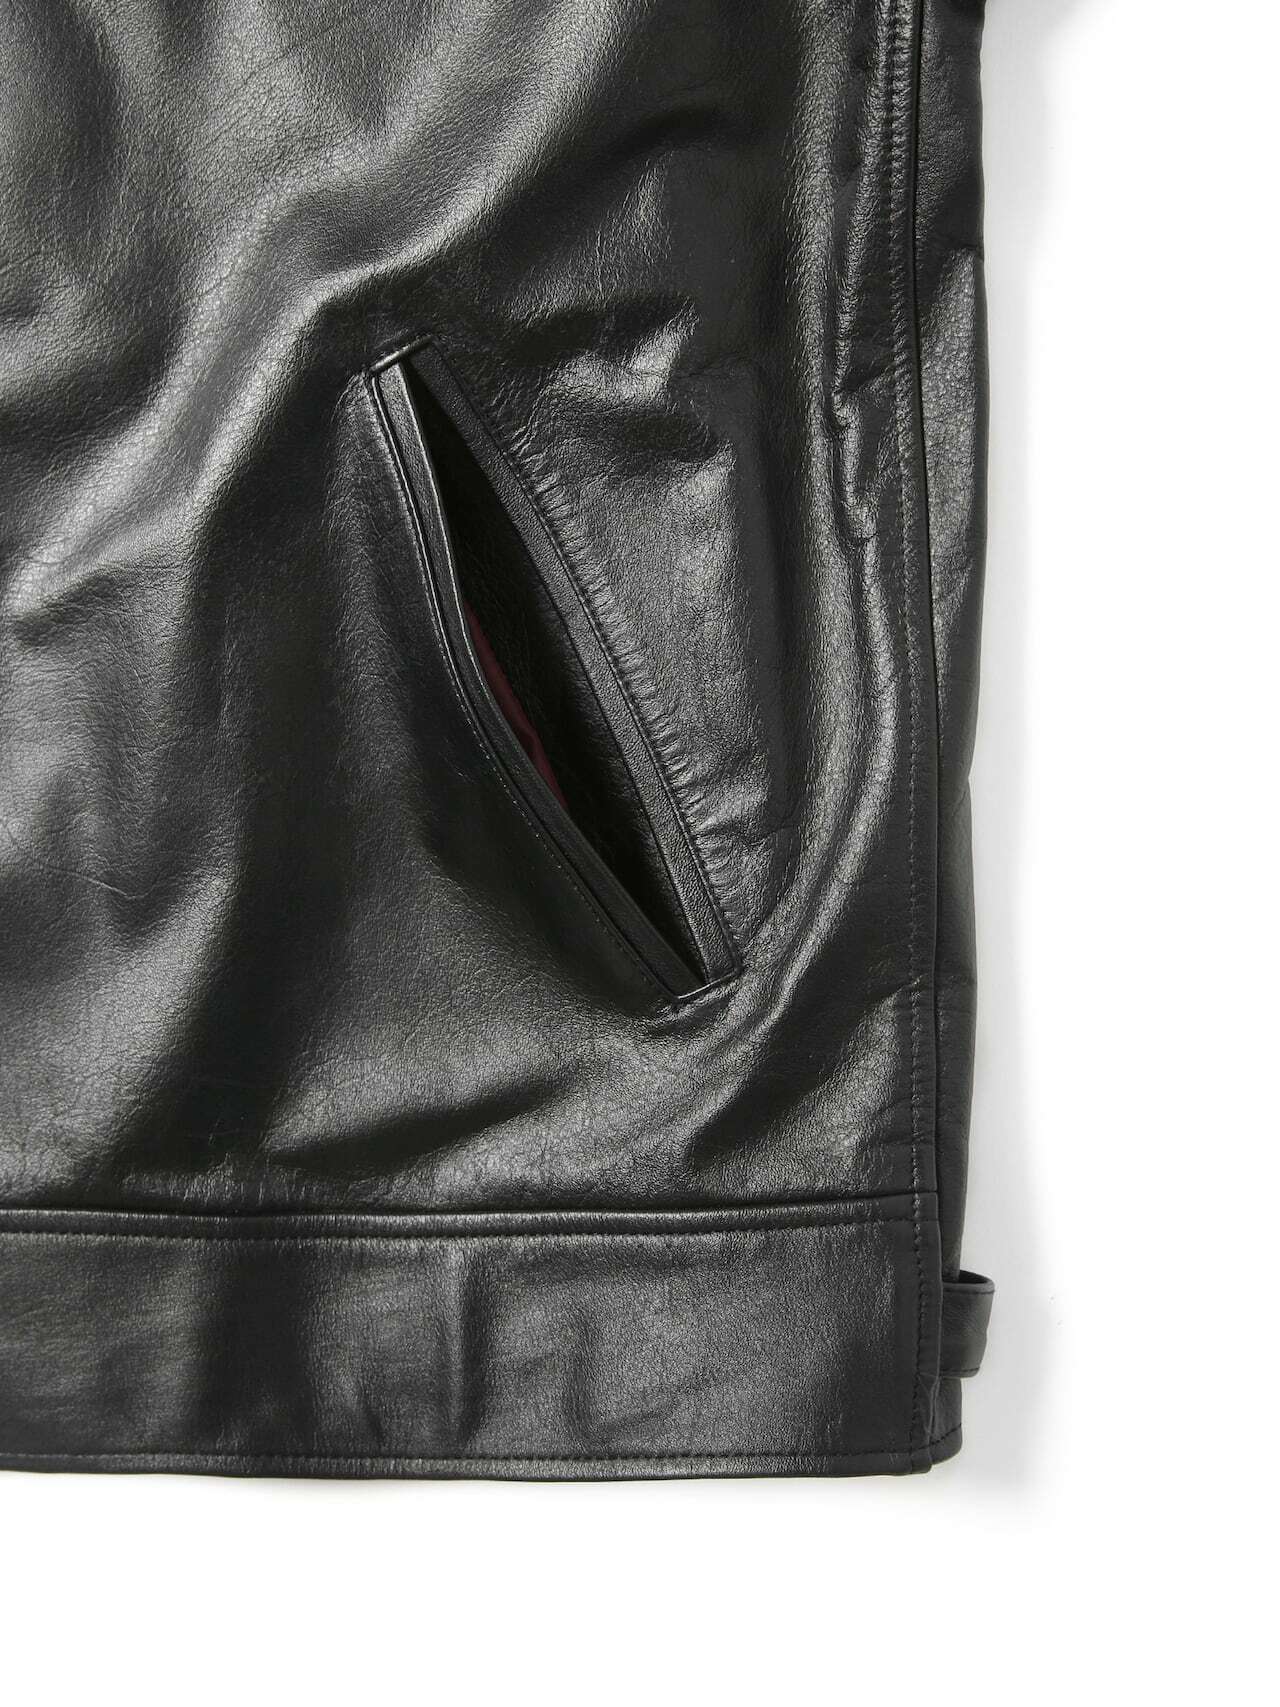 Leather-Sports-Jacket-Black4.jpg